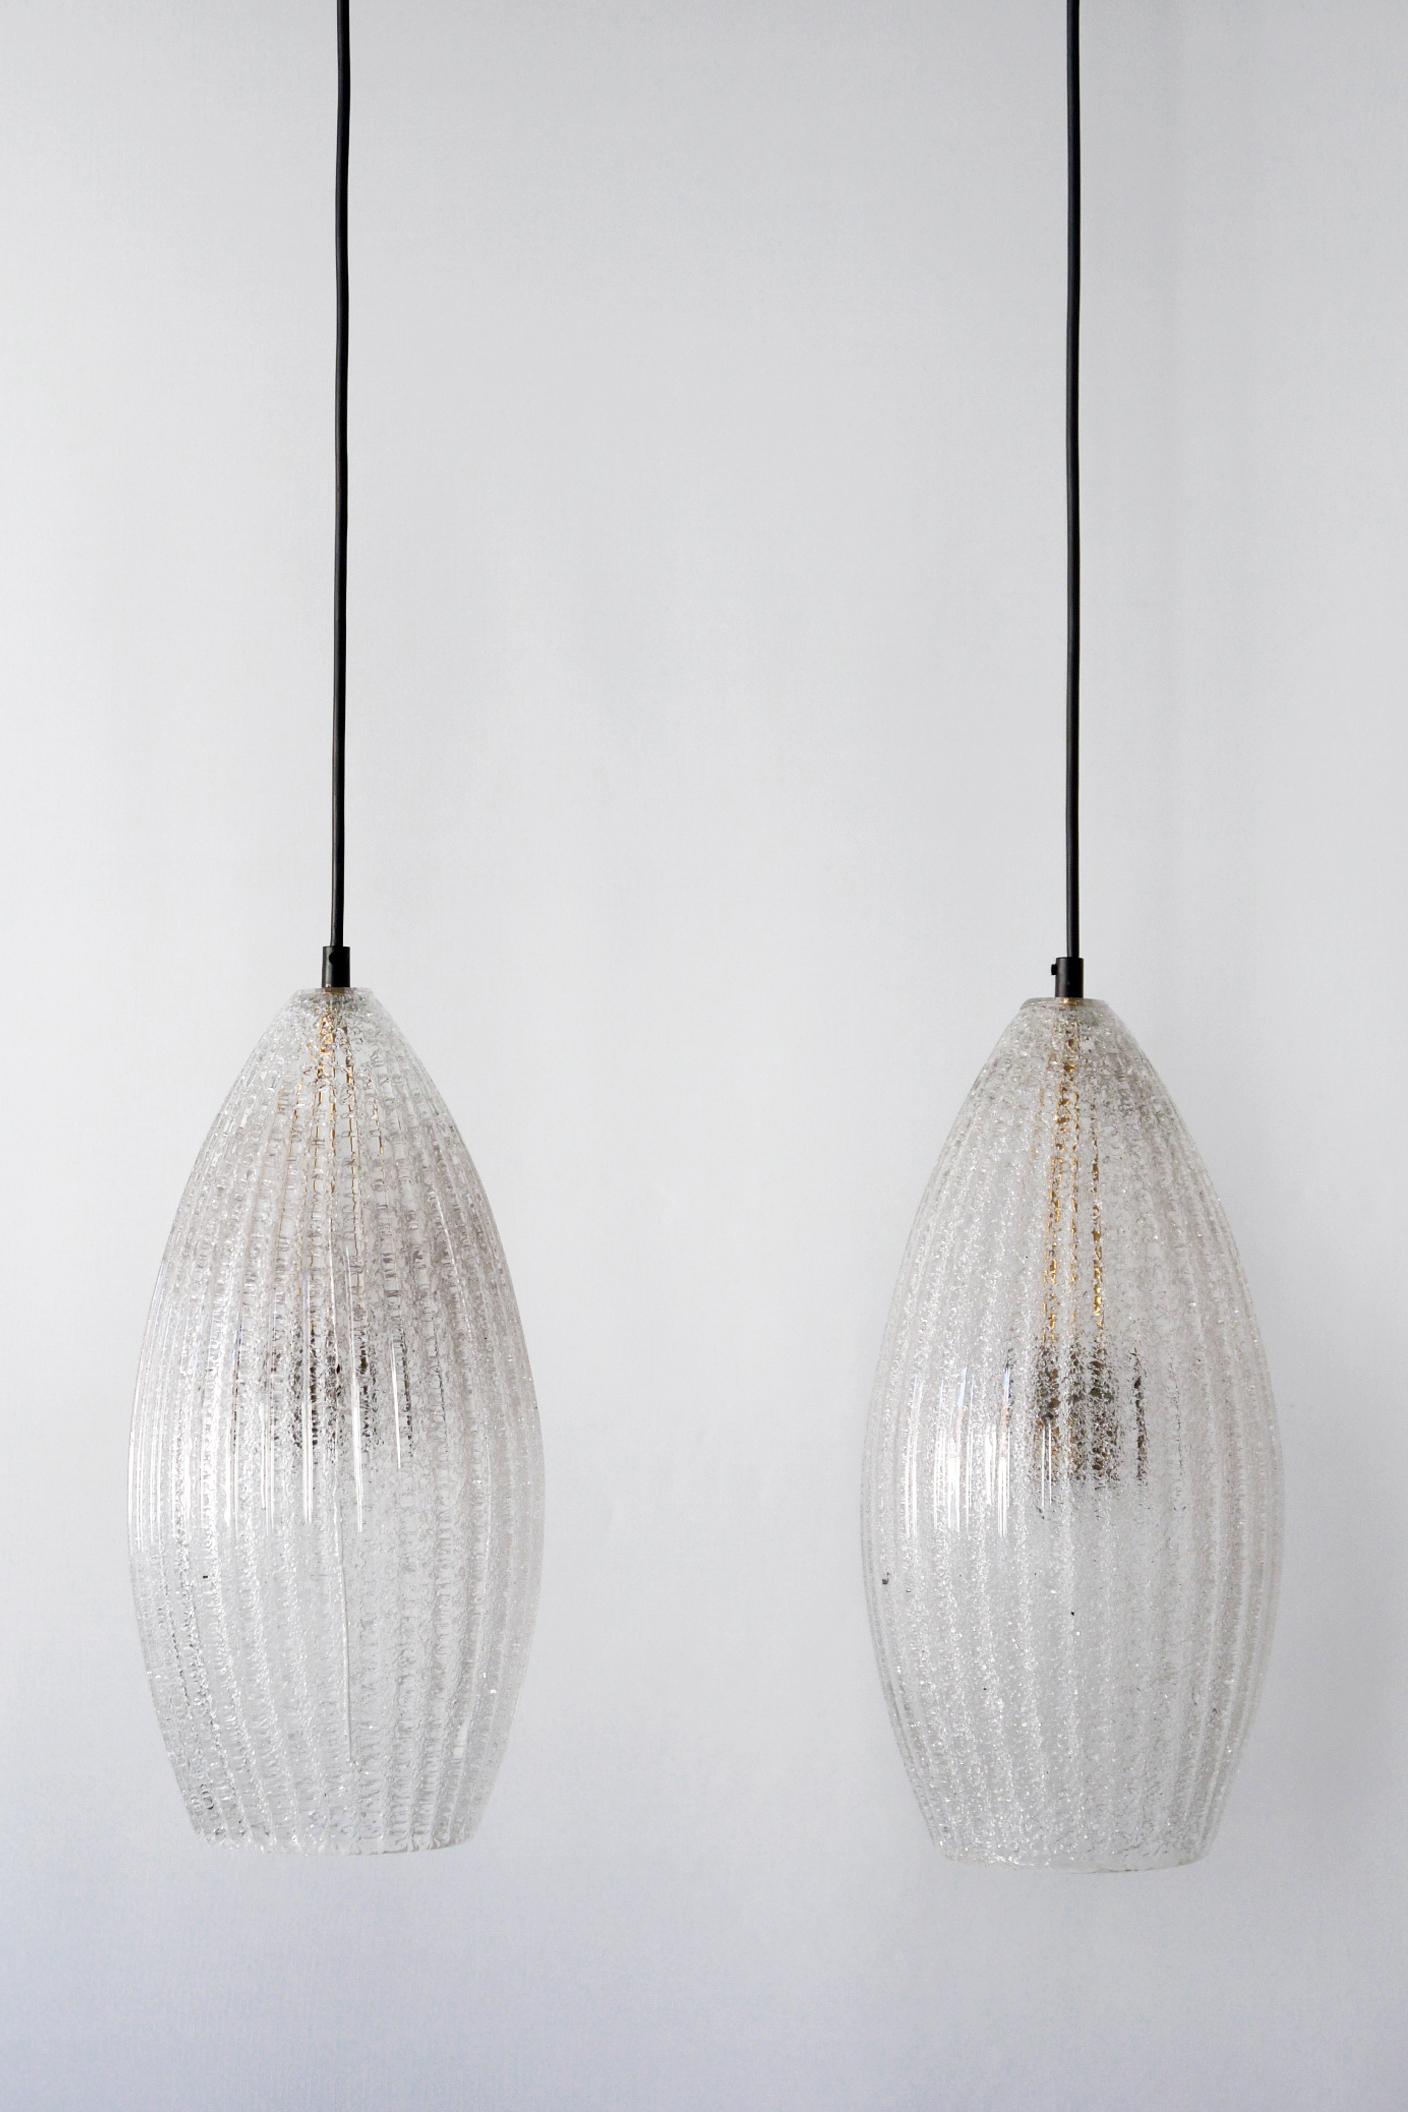 textured glass pendant lights